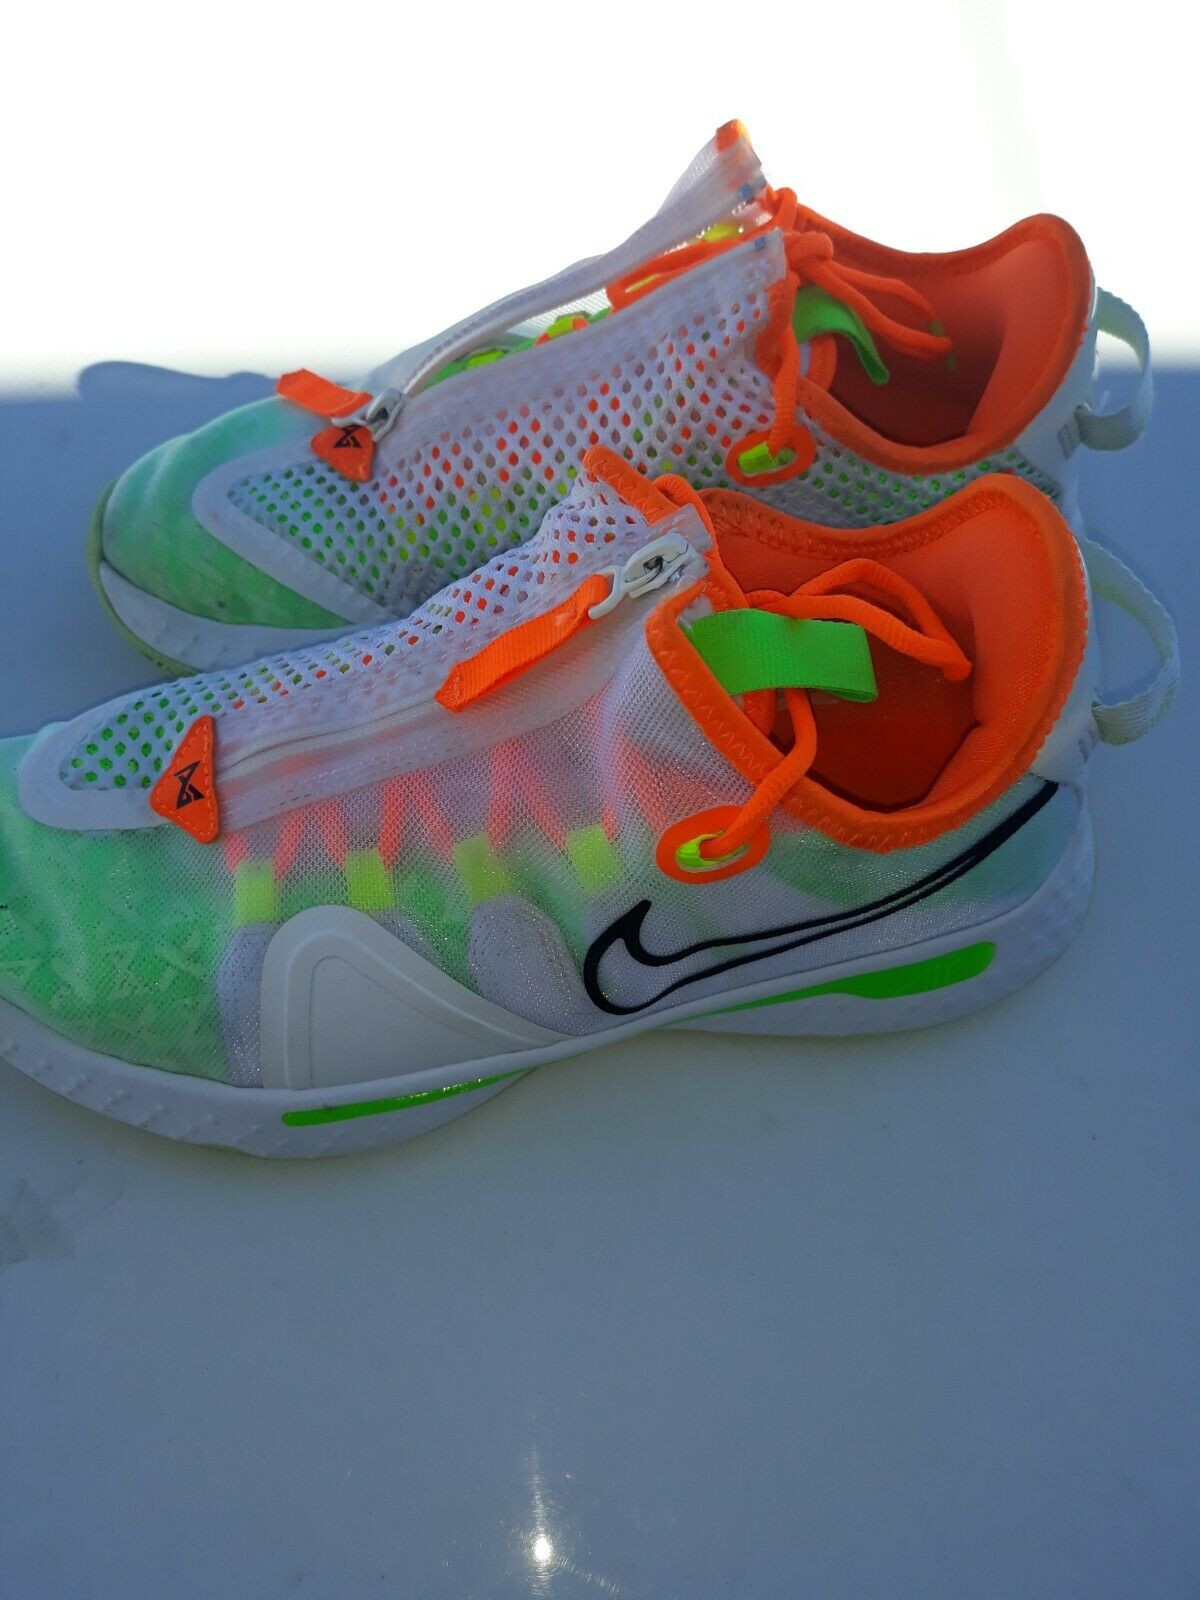 Nike Unisex Adult's Gatorade x PG 4 Shoes JQ2 Multicolor CD5078-100 7.5